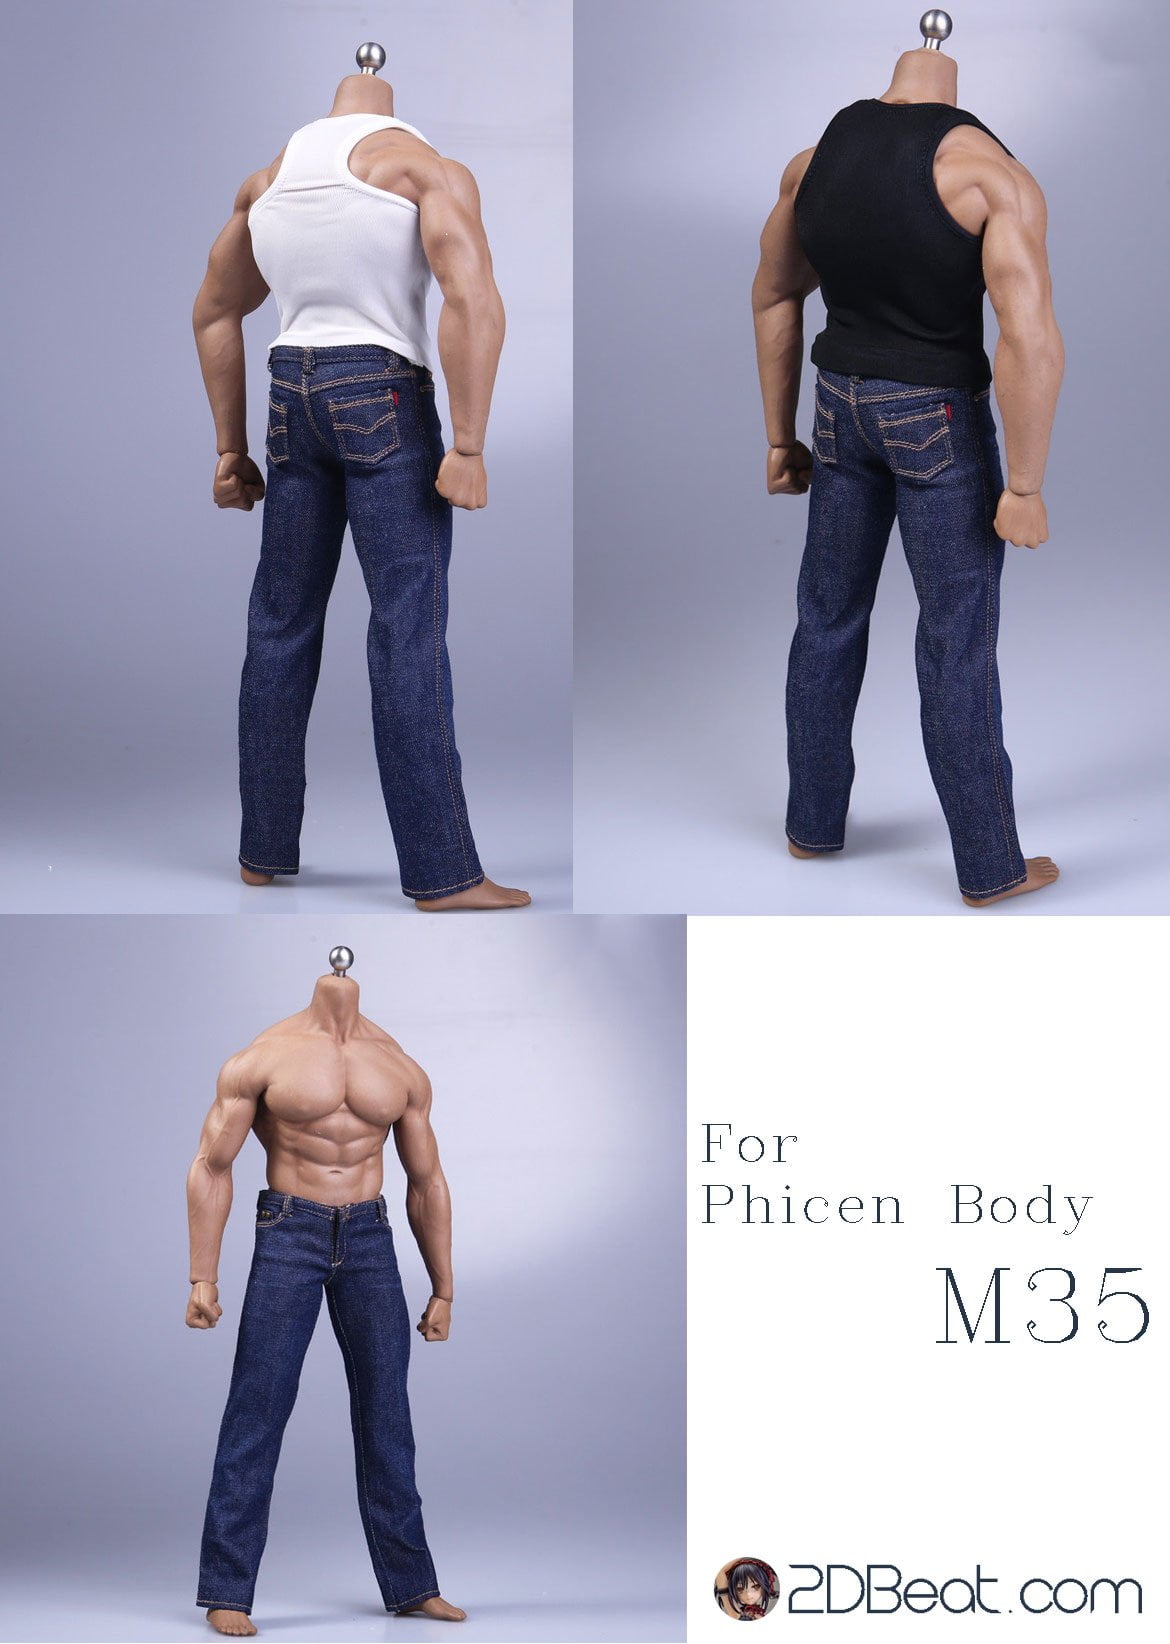 1/6 Male Retro Blue Jeans 12" Male Figure Accessories F Phicen Man Toys New 